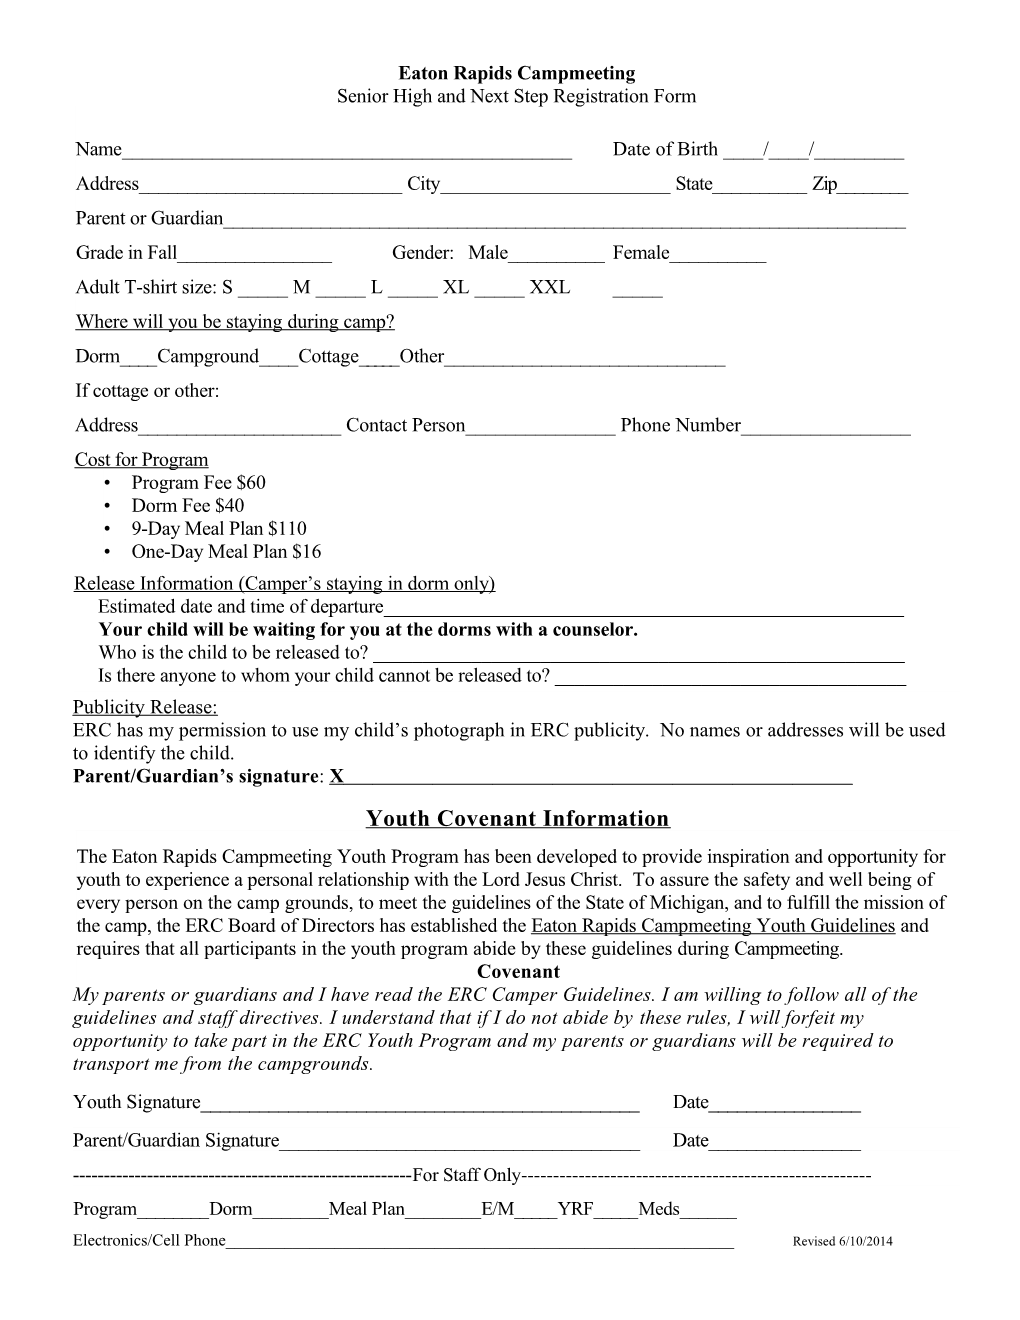 Senior High and Next Step Registration Form